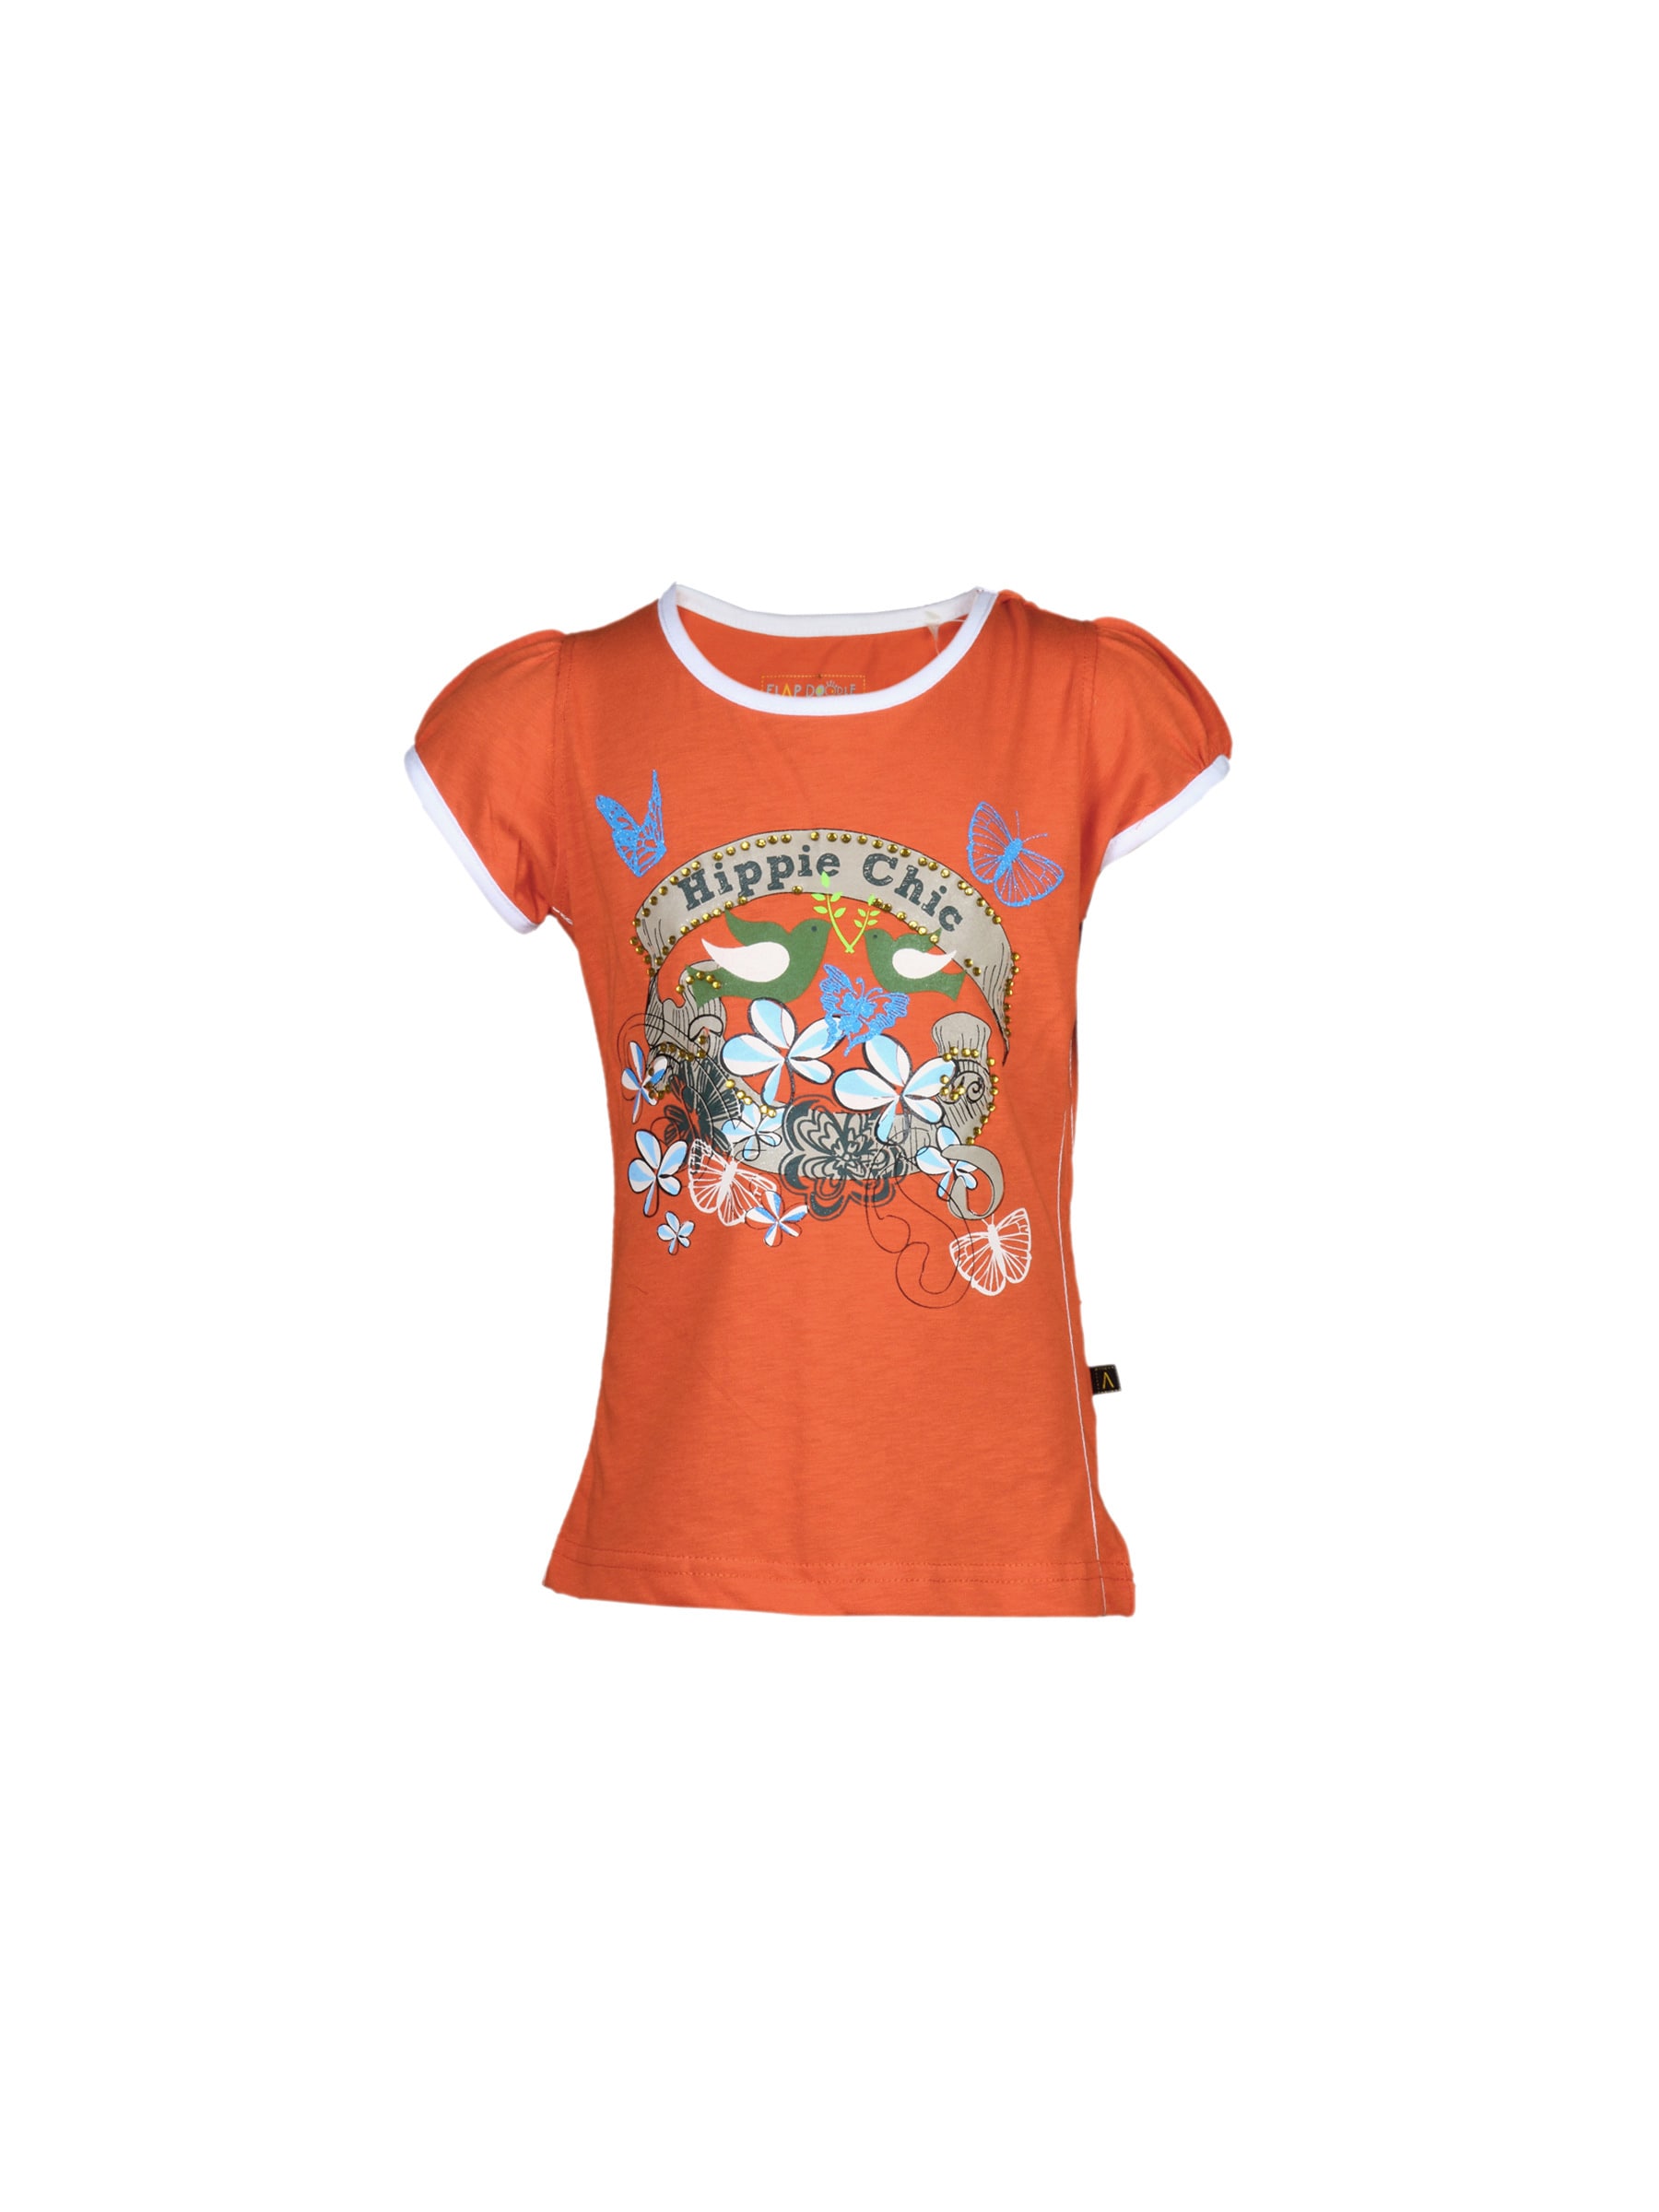 Doodle Girl's Hippie Chic Orange Teen Kidswear